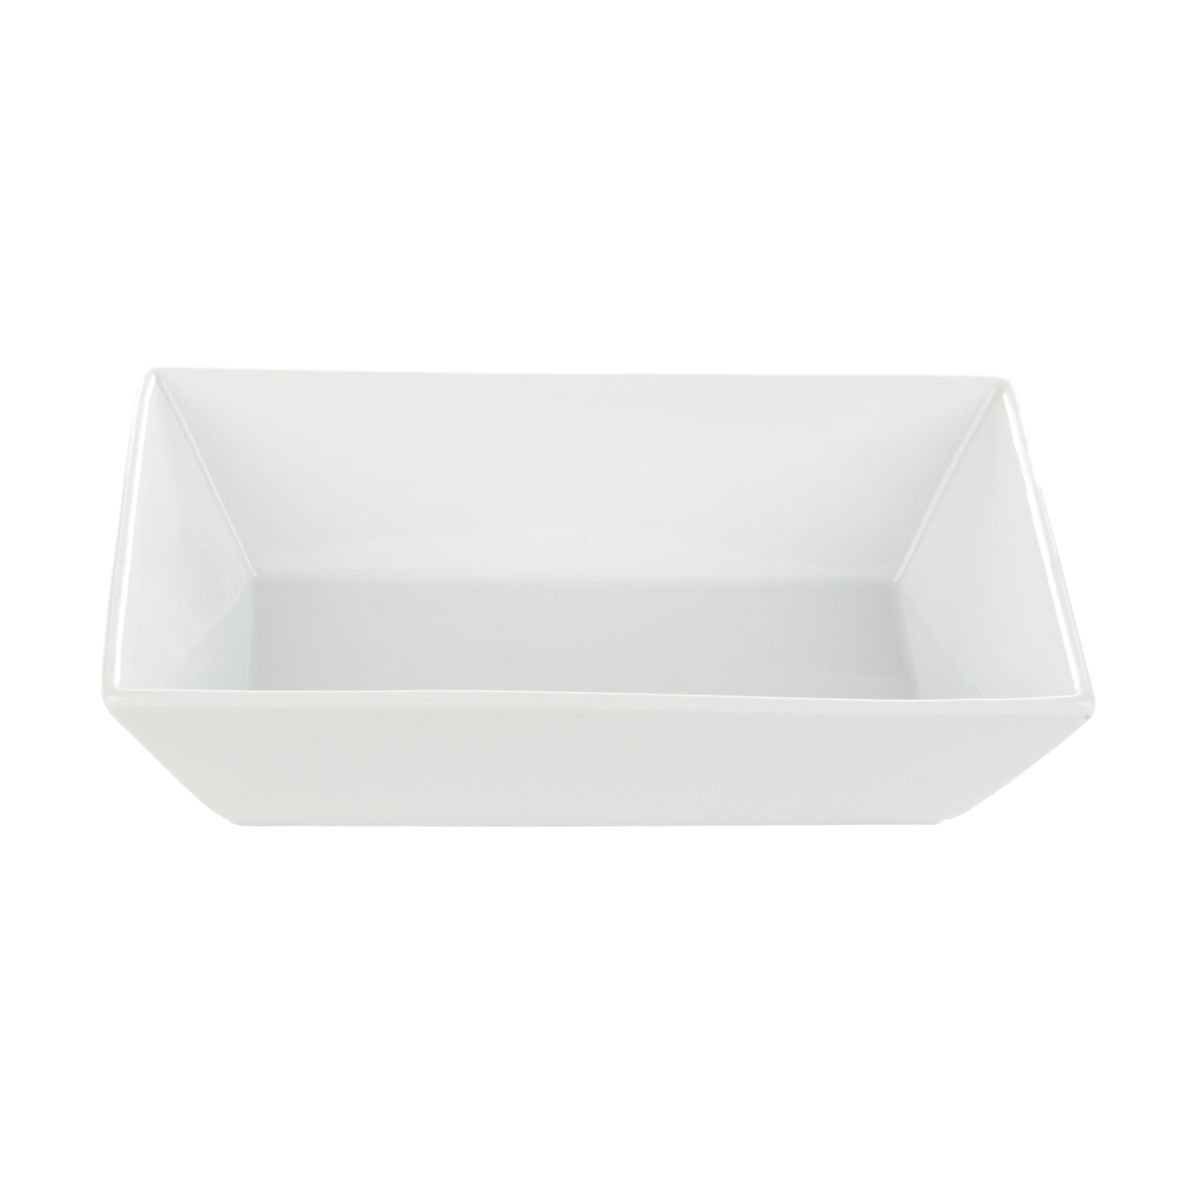 bowl rectangular 20x13x5 box6